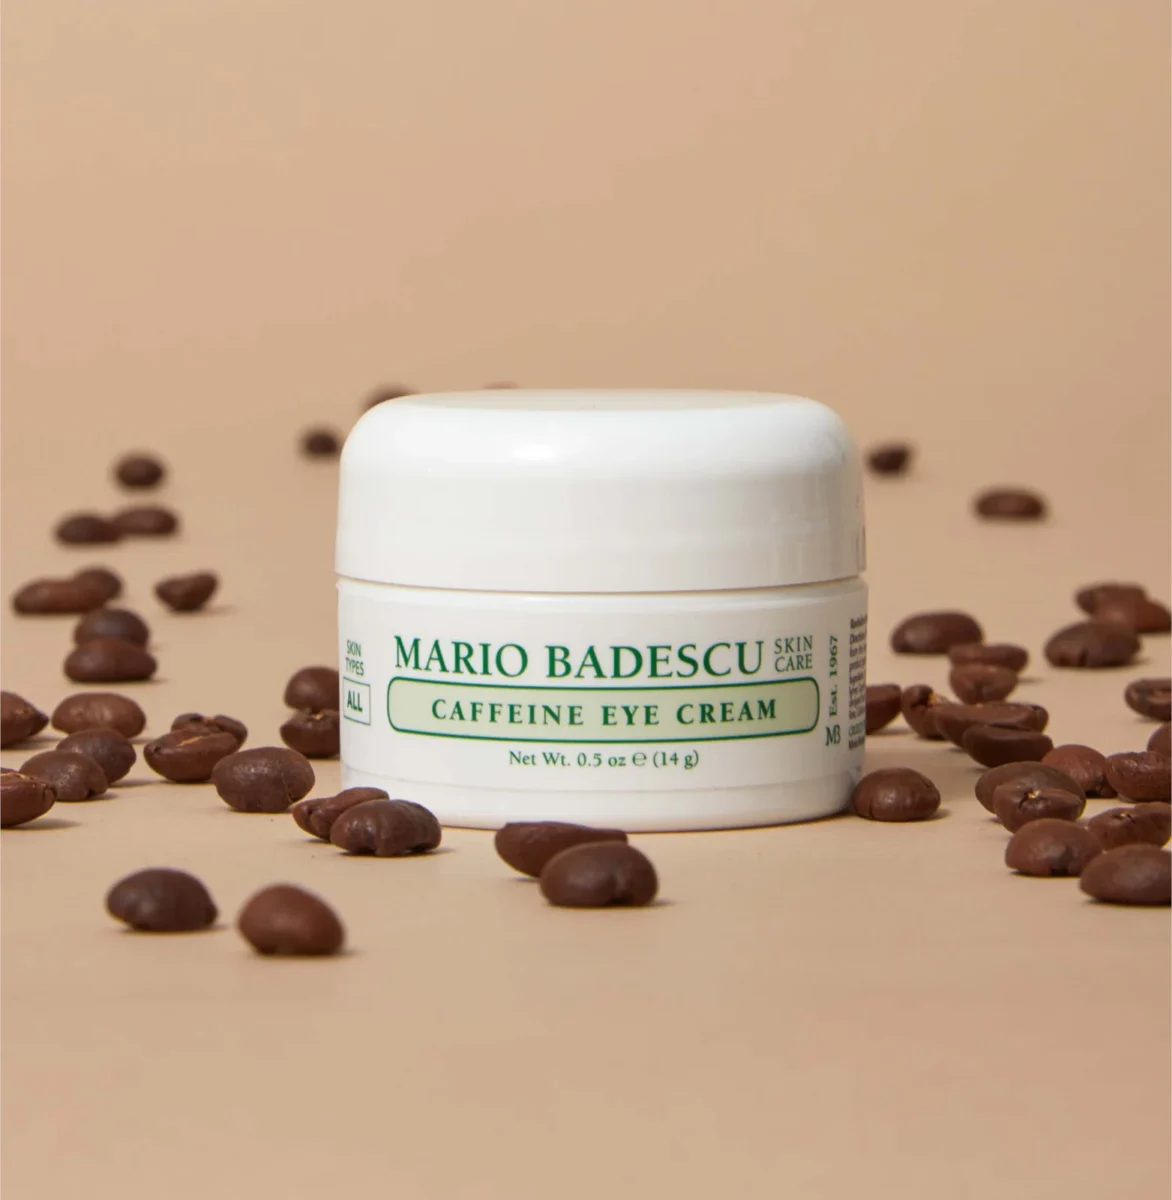 Caffeine Eye Cream,Mario Badescu